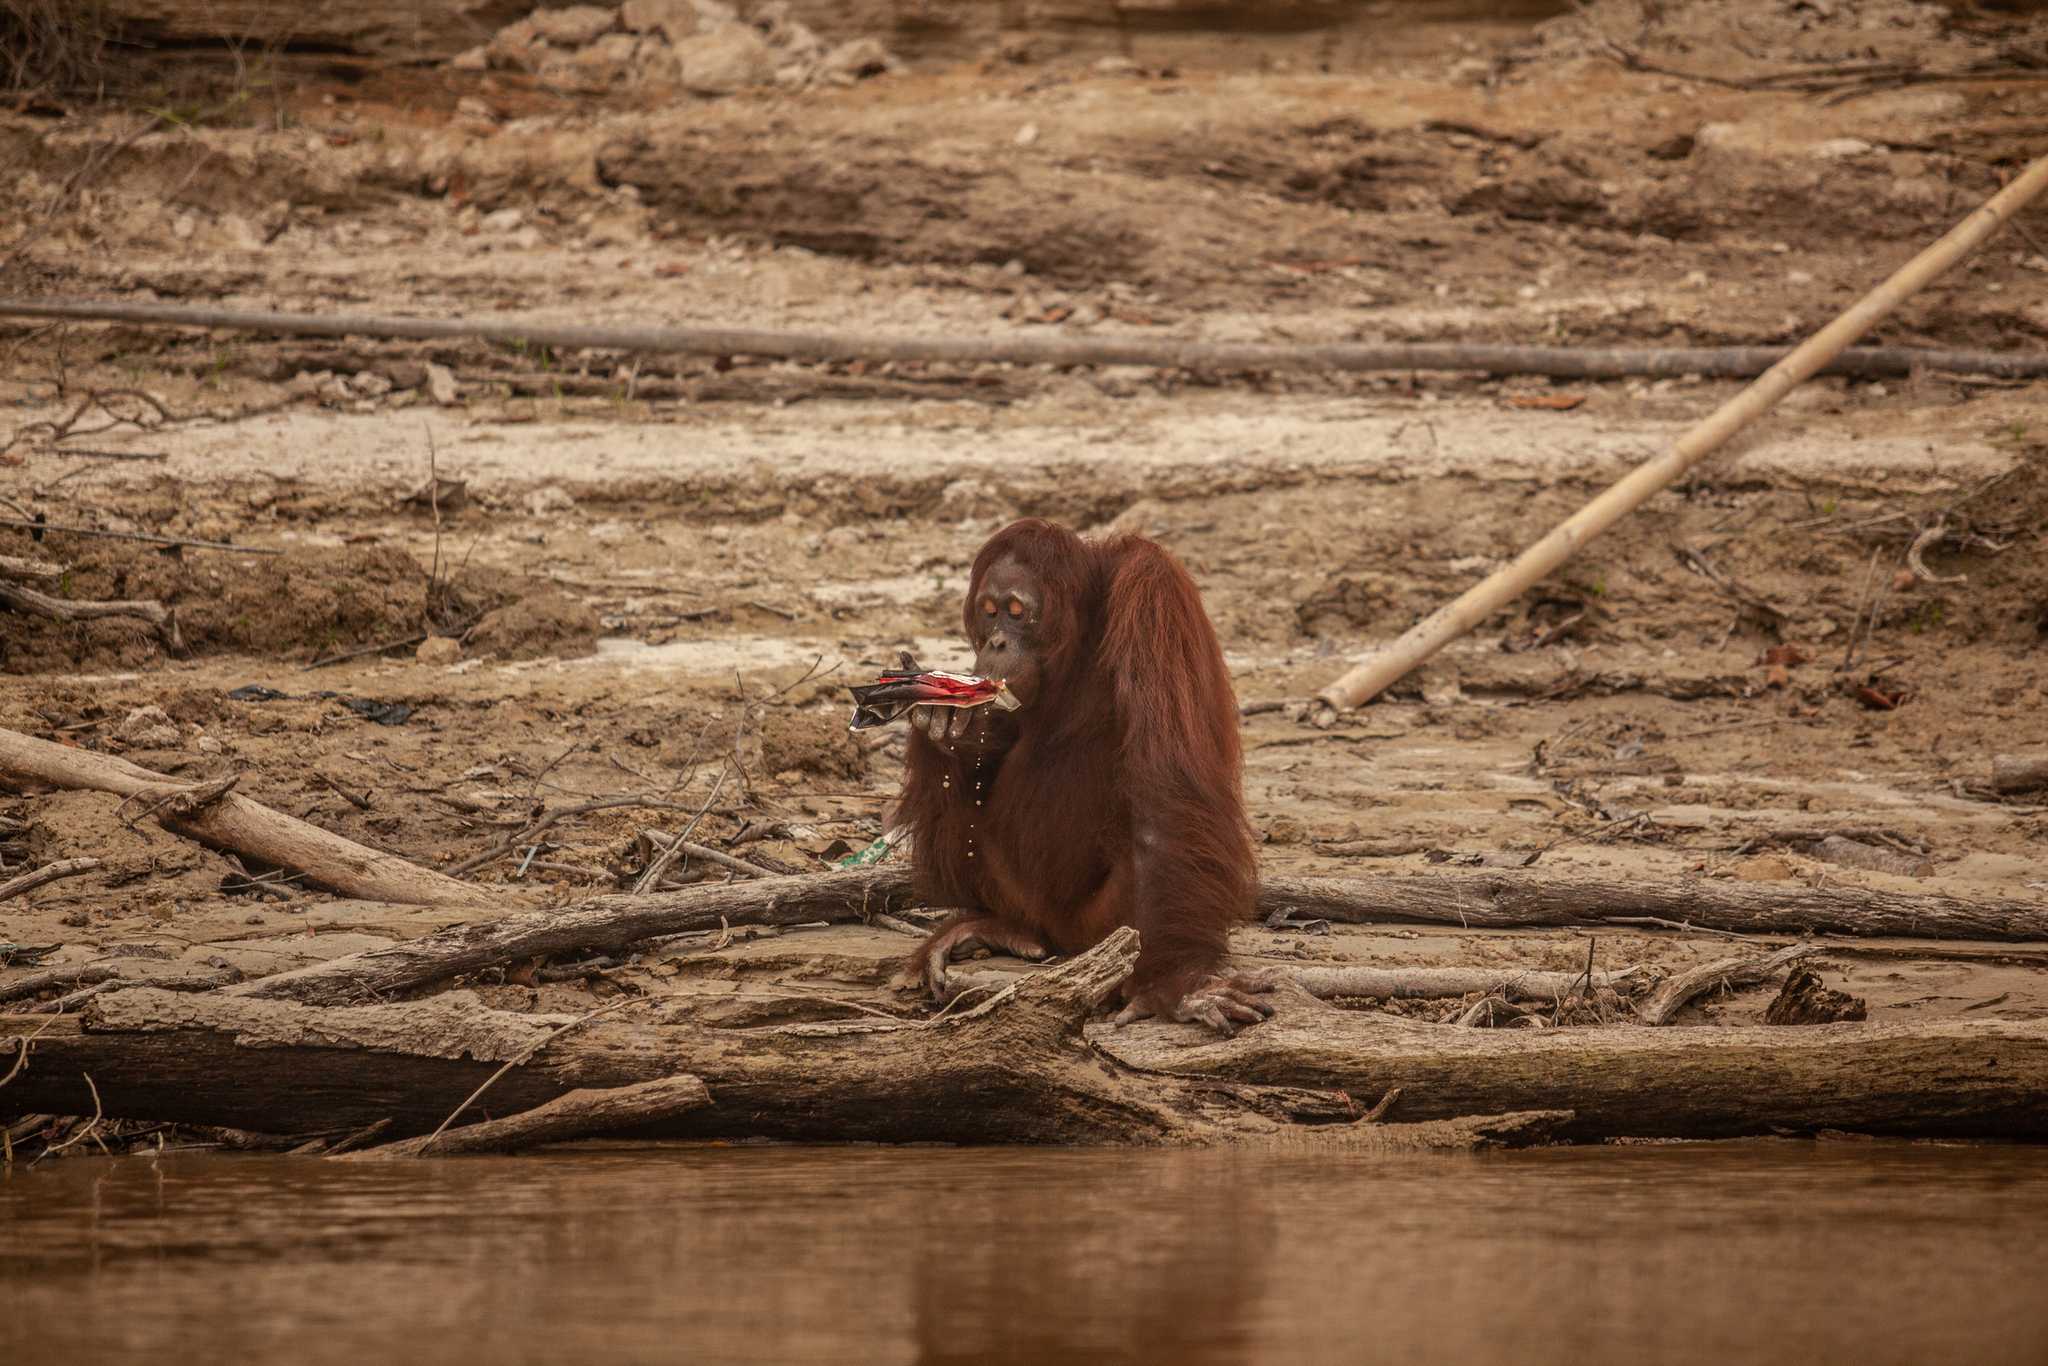 An orangutan drinks water using a plastic sachet in Salat Island in Central Kalimantan.